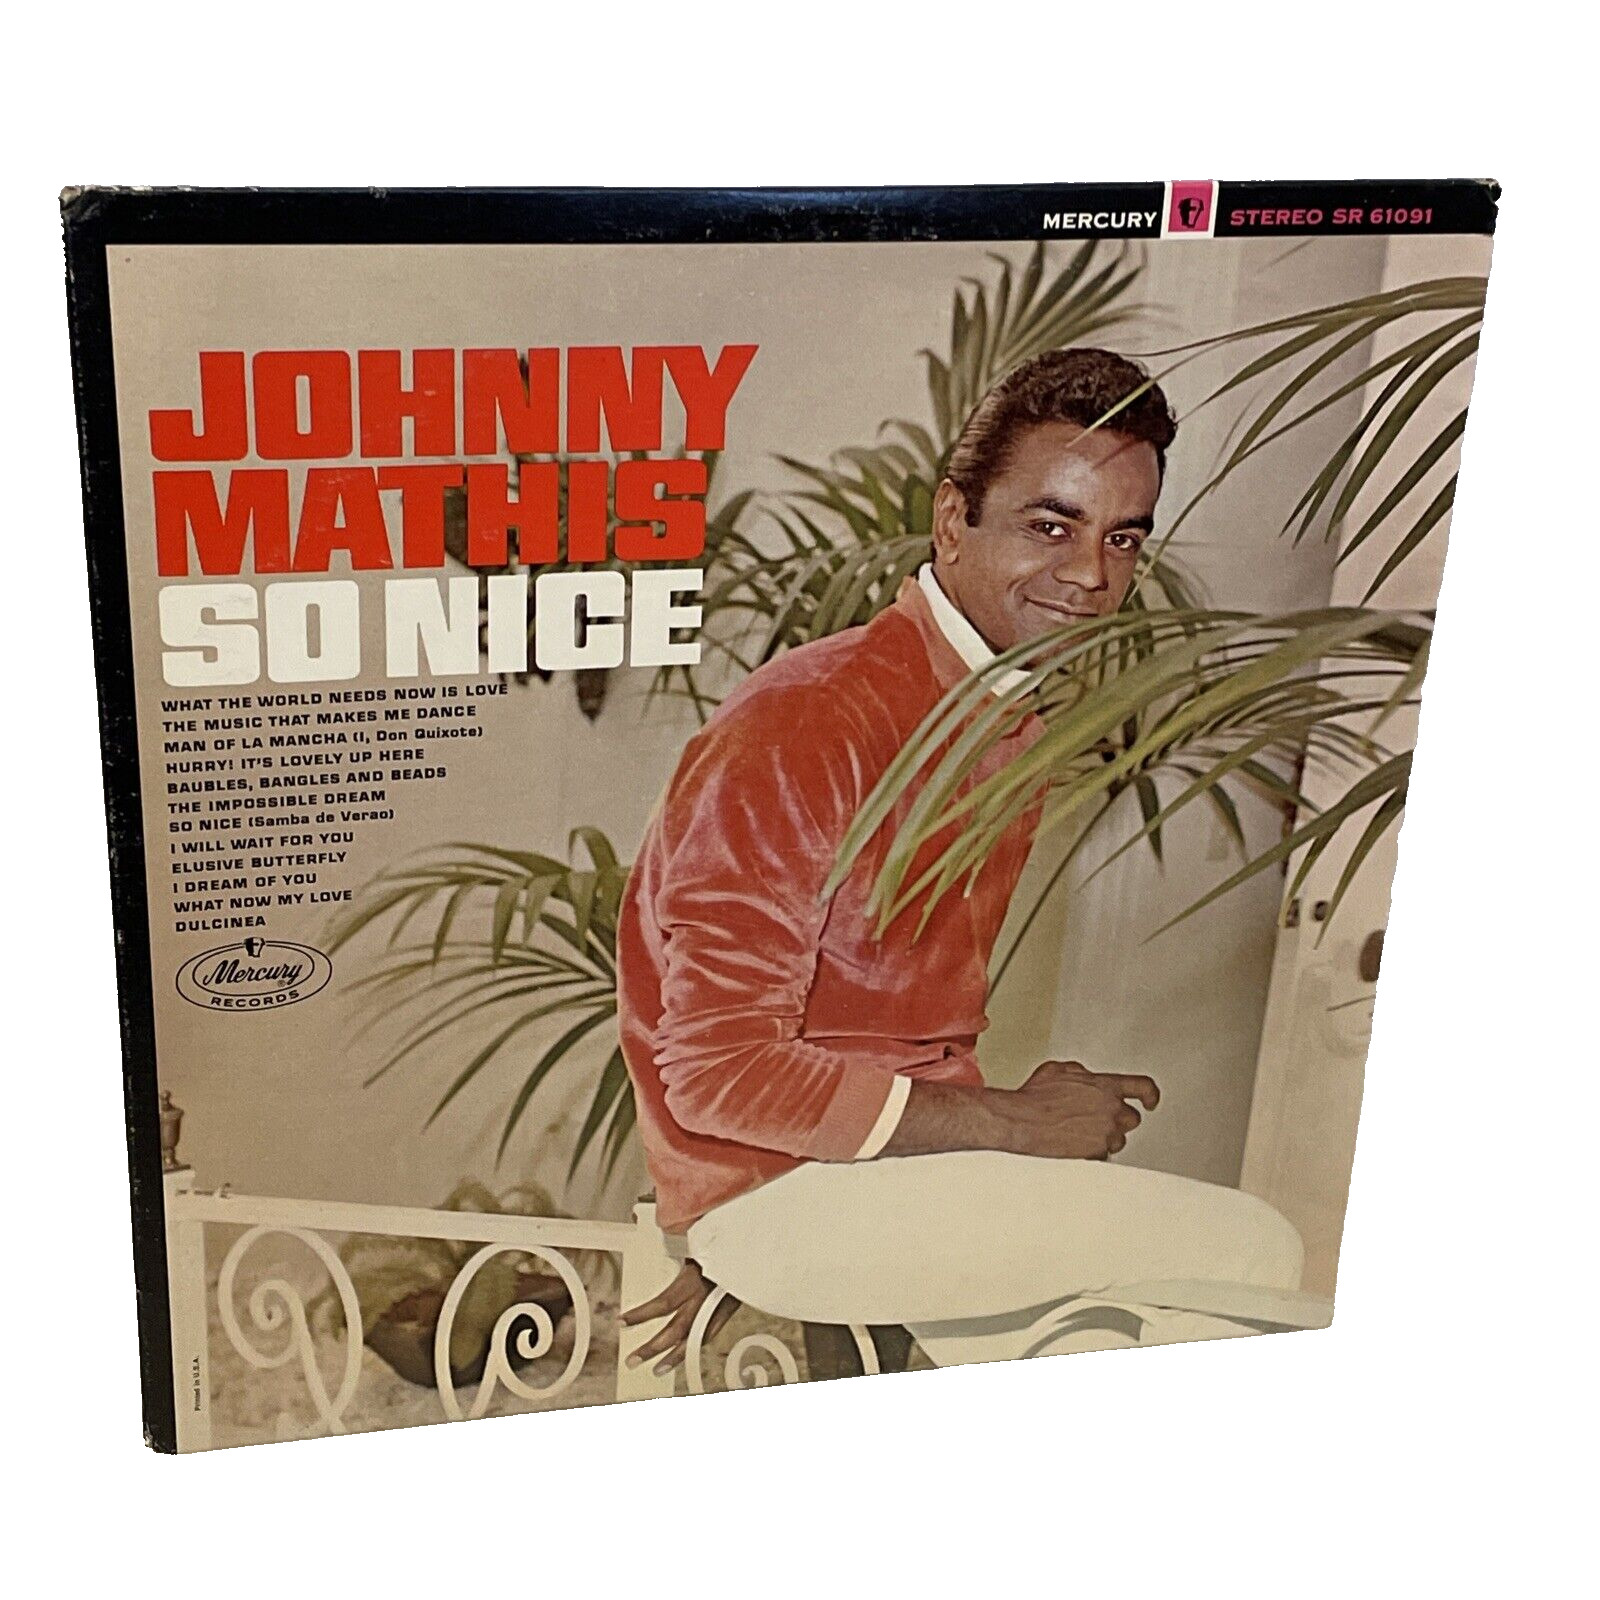 Johnny Mathis So Nice (Vinyl, 1966) Mercury SR 61091 Good LP Record Album